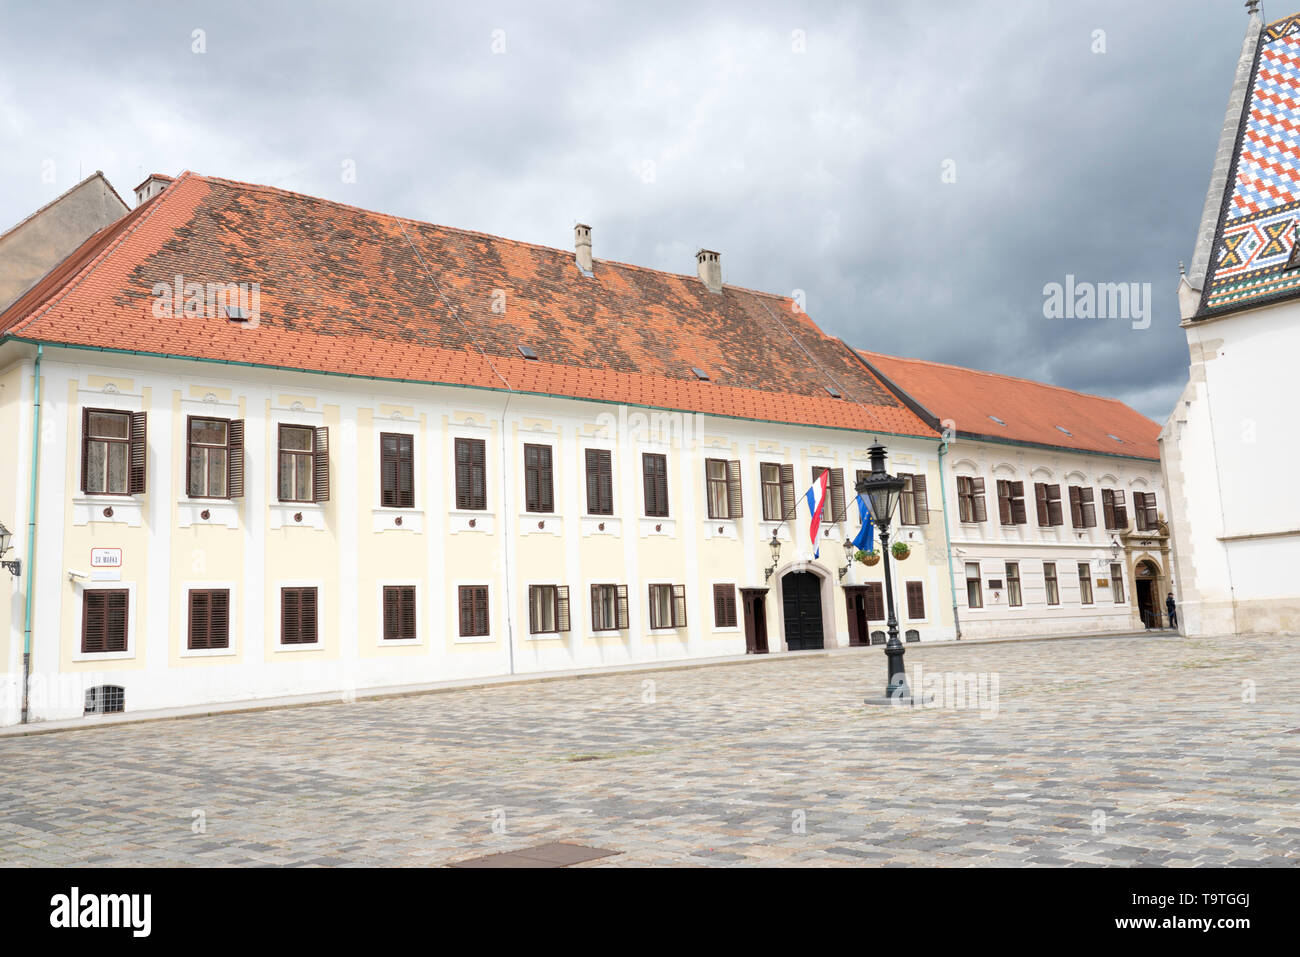 Zagreb, Croatia - Banski dvori Croatian seat of Government on the St. Mark's Square Stock Photo